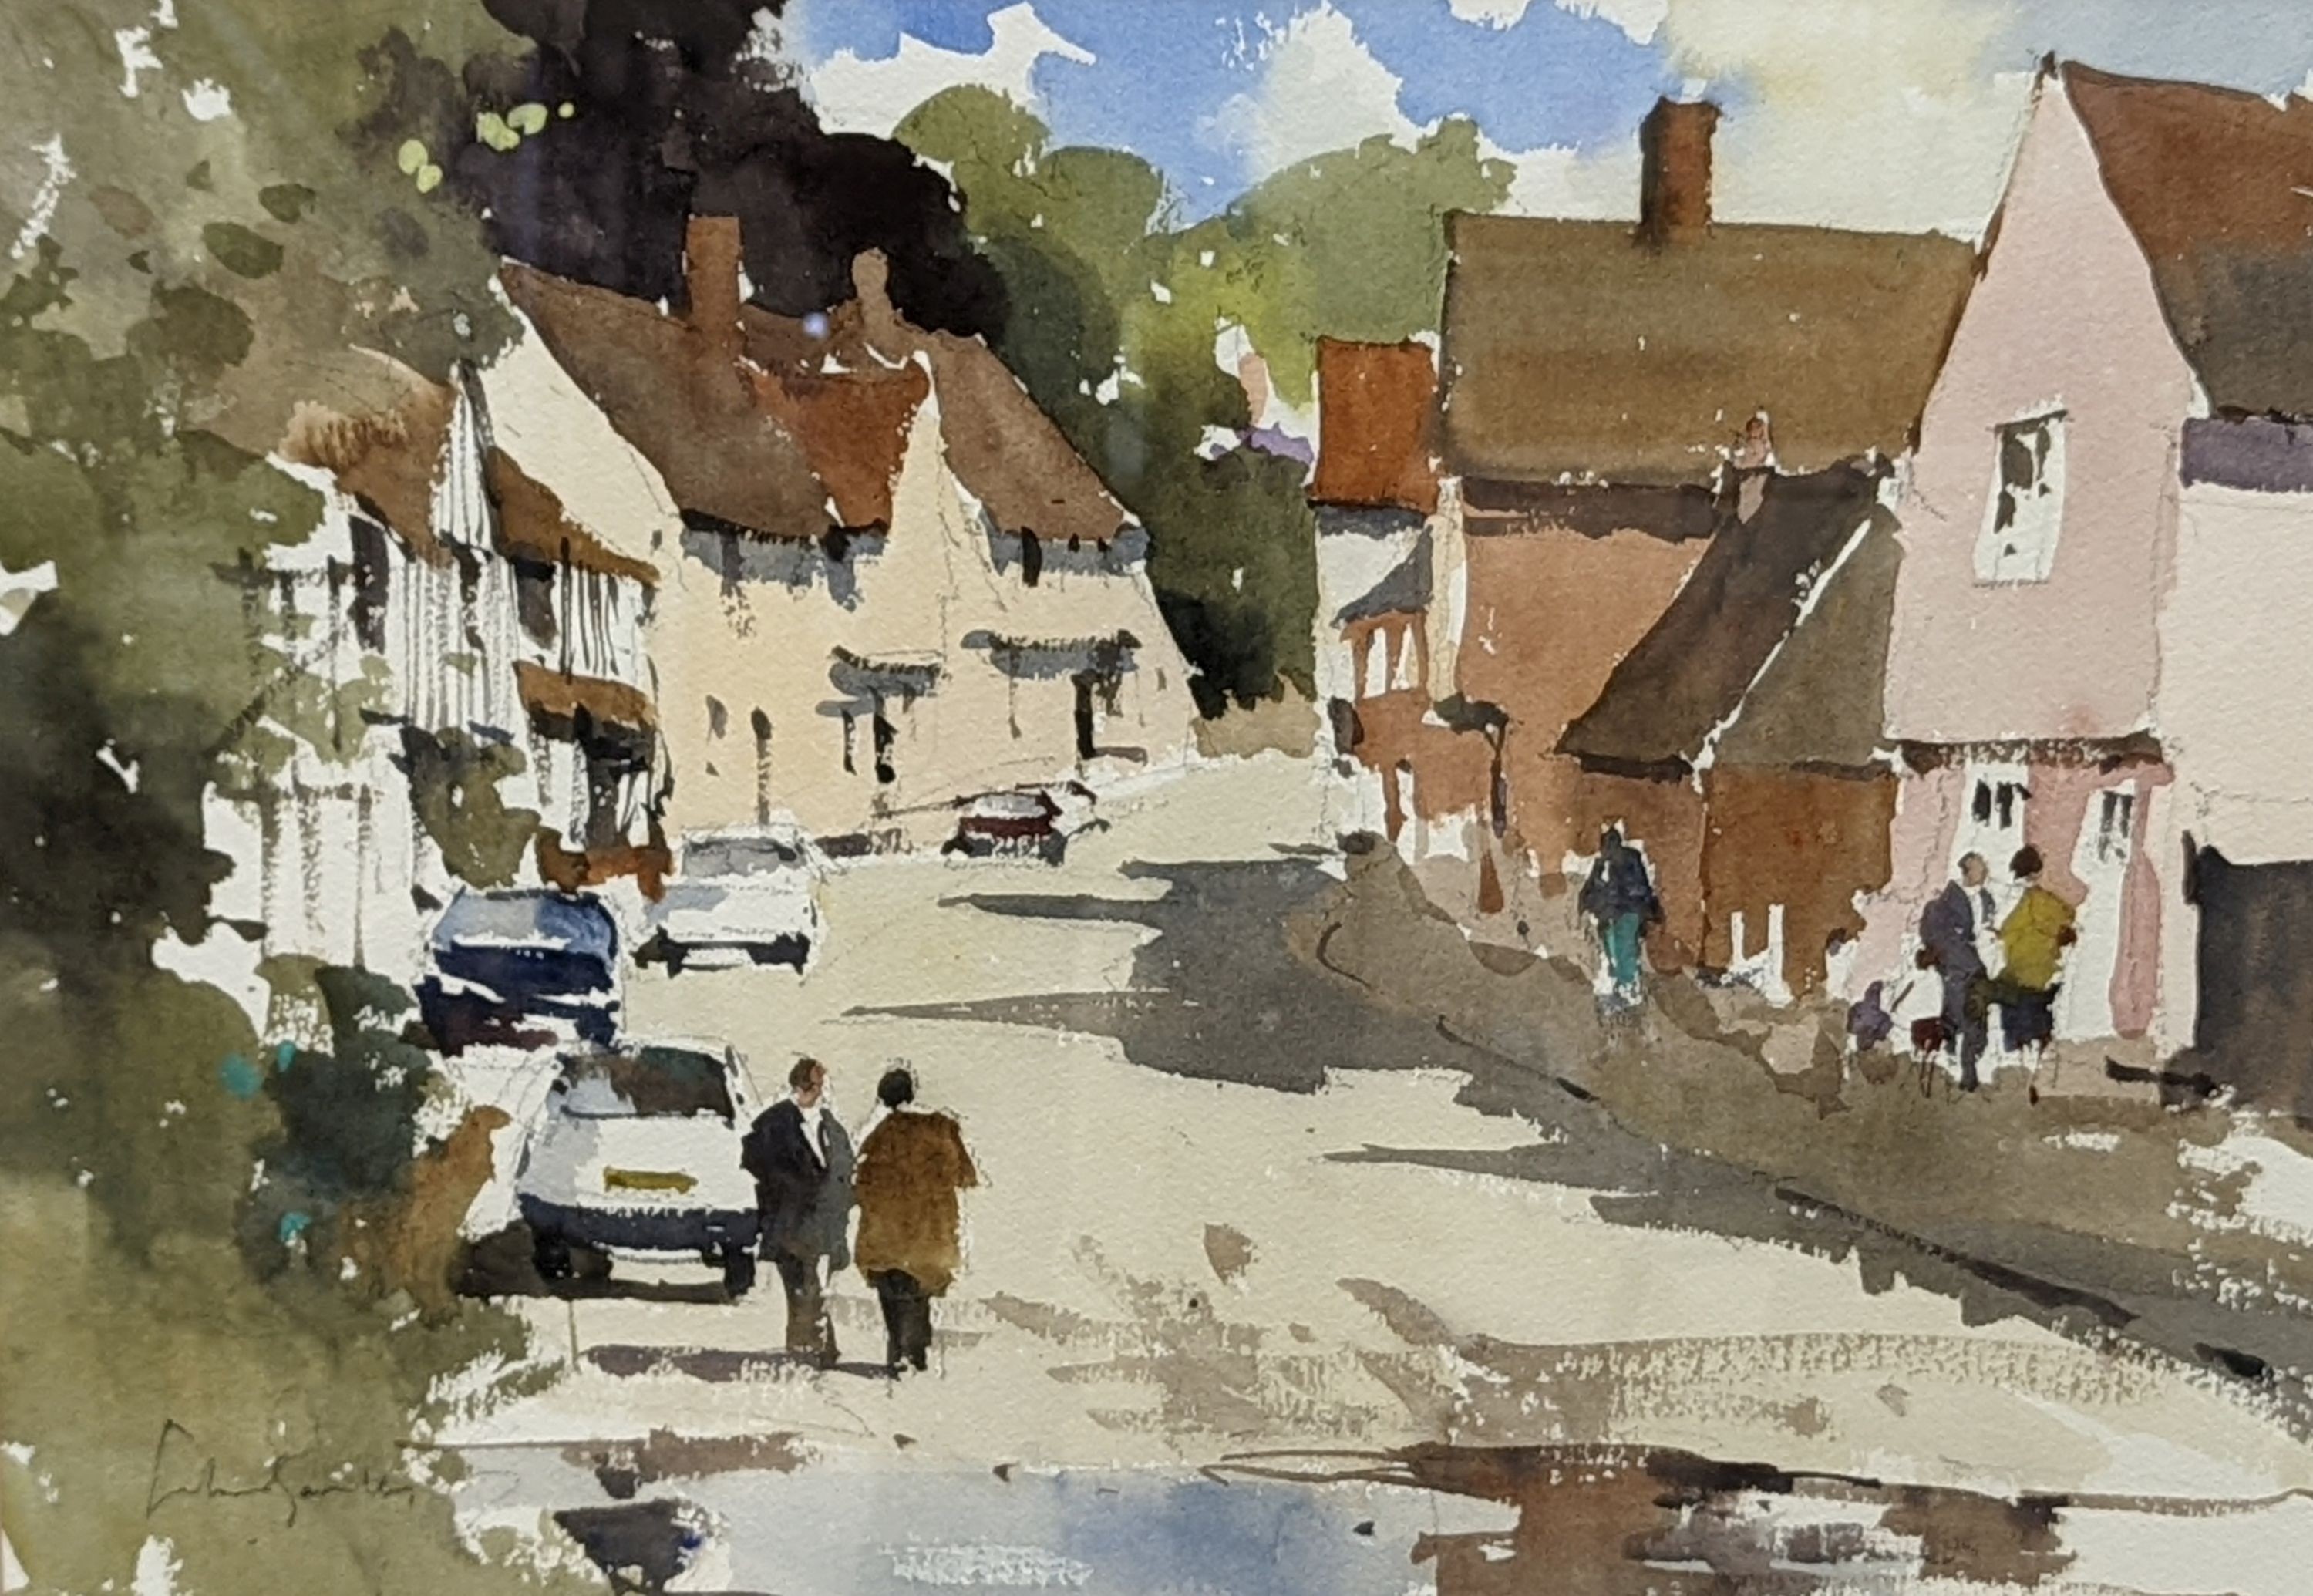 John Yardley (b.1933), watercolour, Kersey village, signed, 34 x 49cm